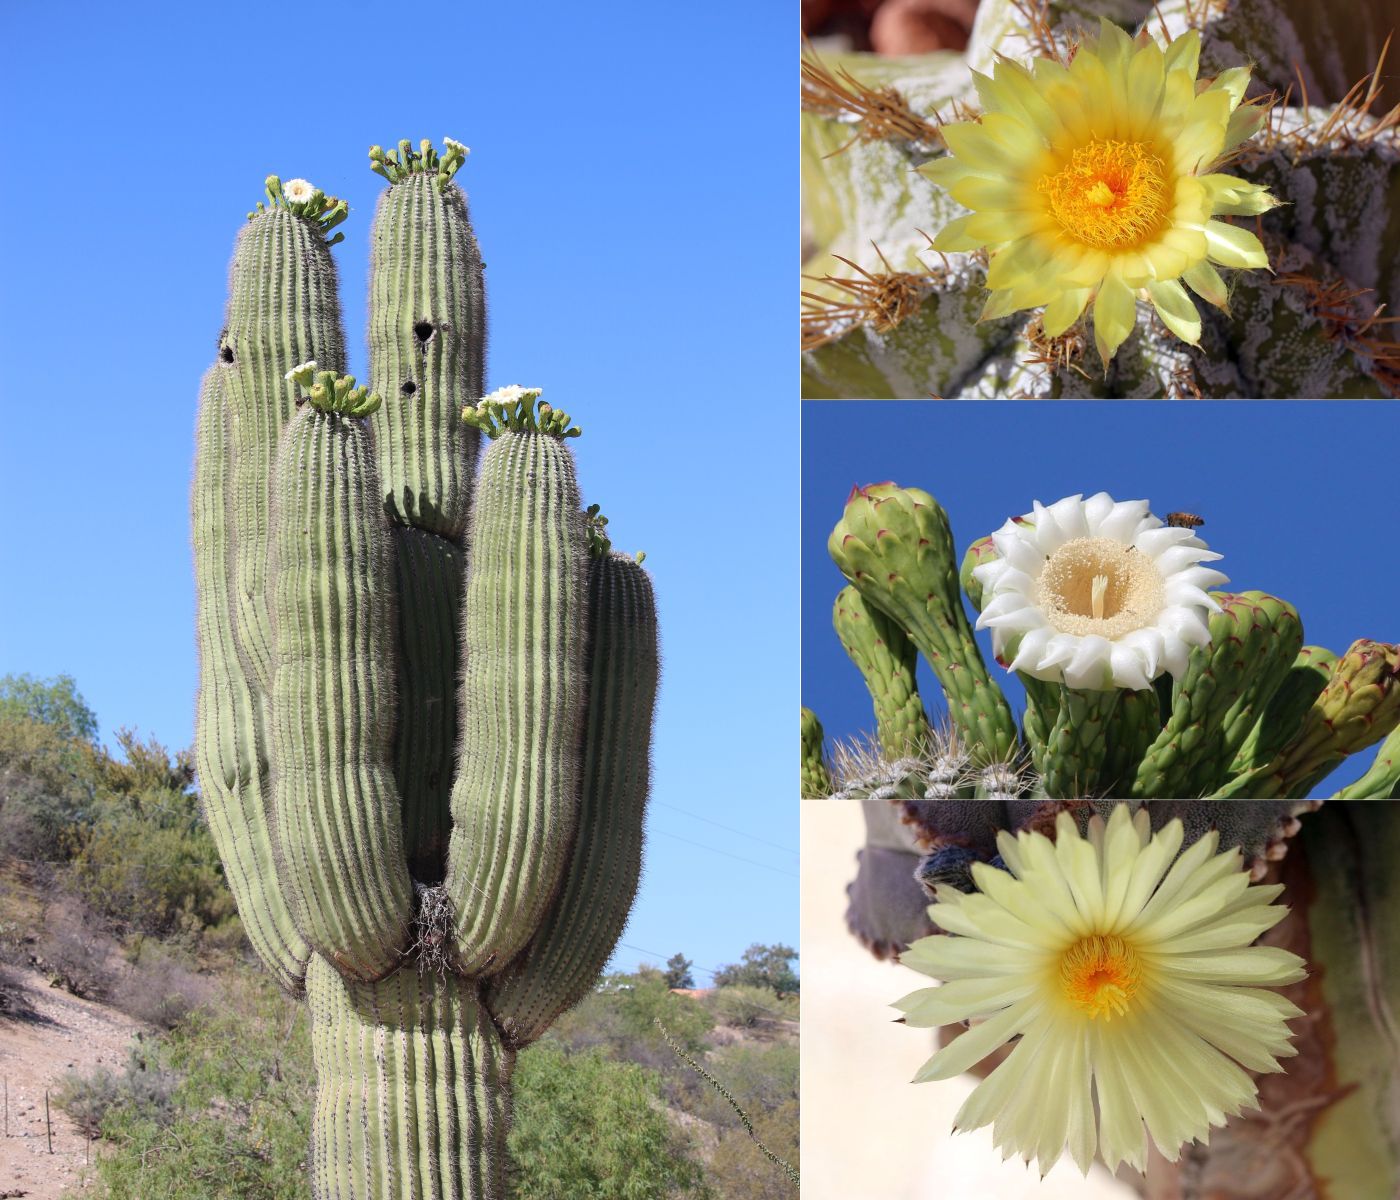 http://capnbob.us/blog/wp-content/uploads/2022/05/20220516-spring-cactus-flowers.jpg